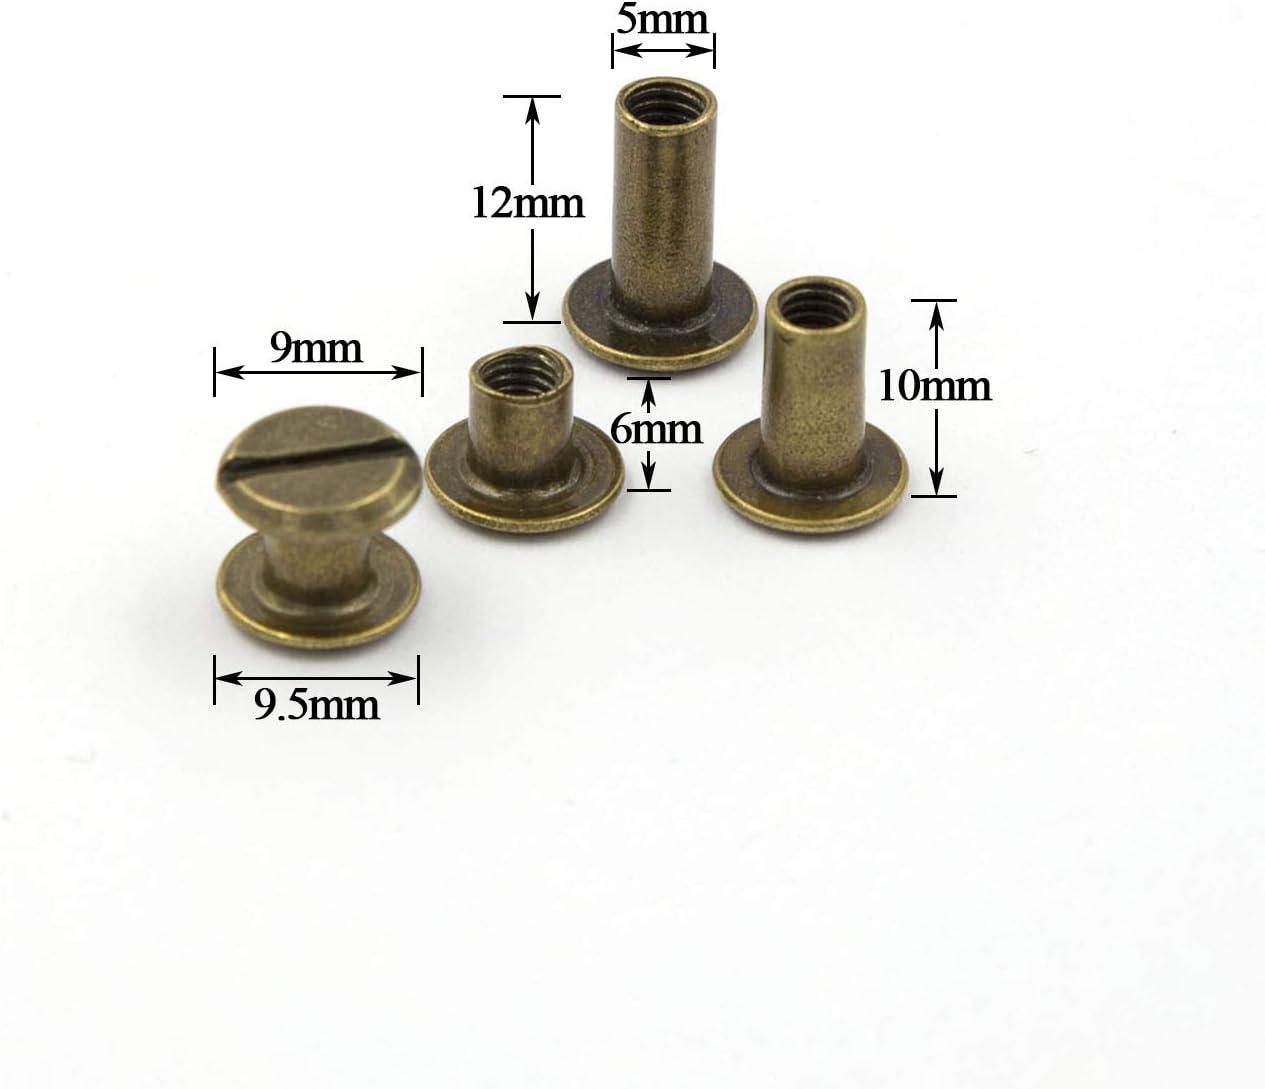 10mm Width Brass Flat Rivets and Studs for Handbags/screwed 